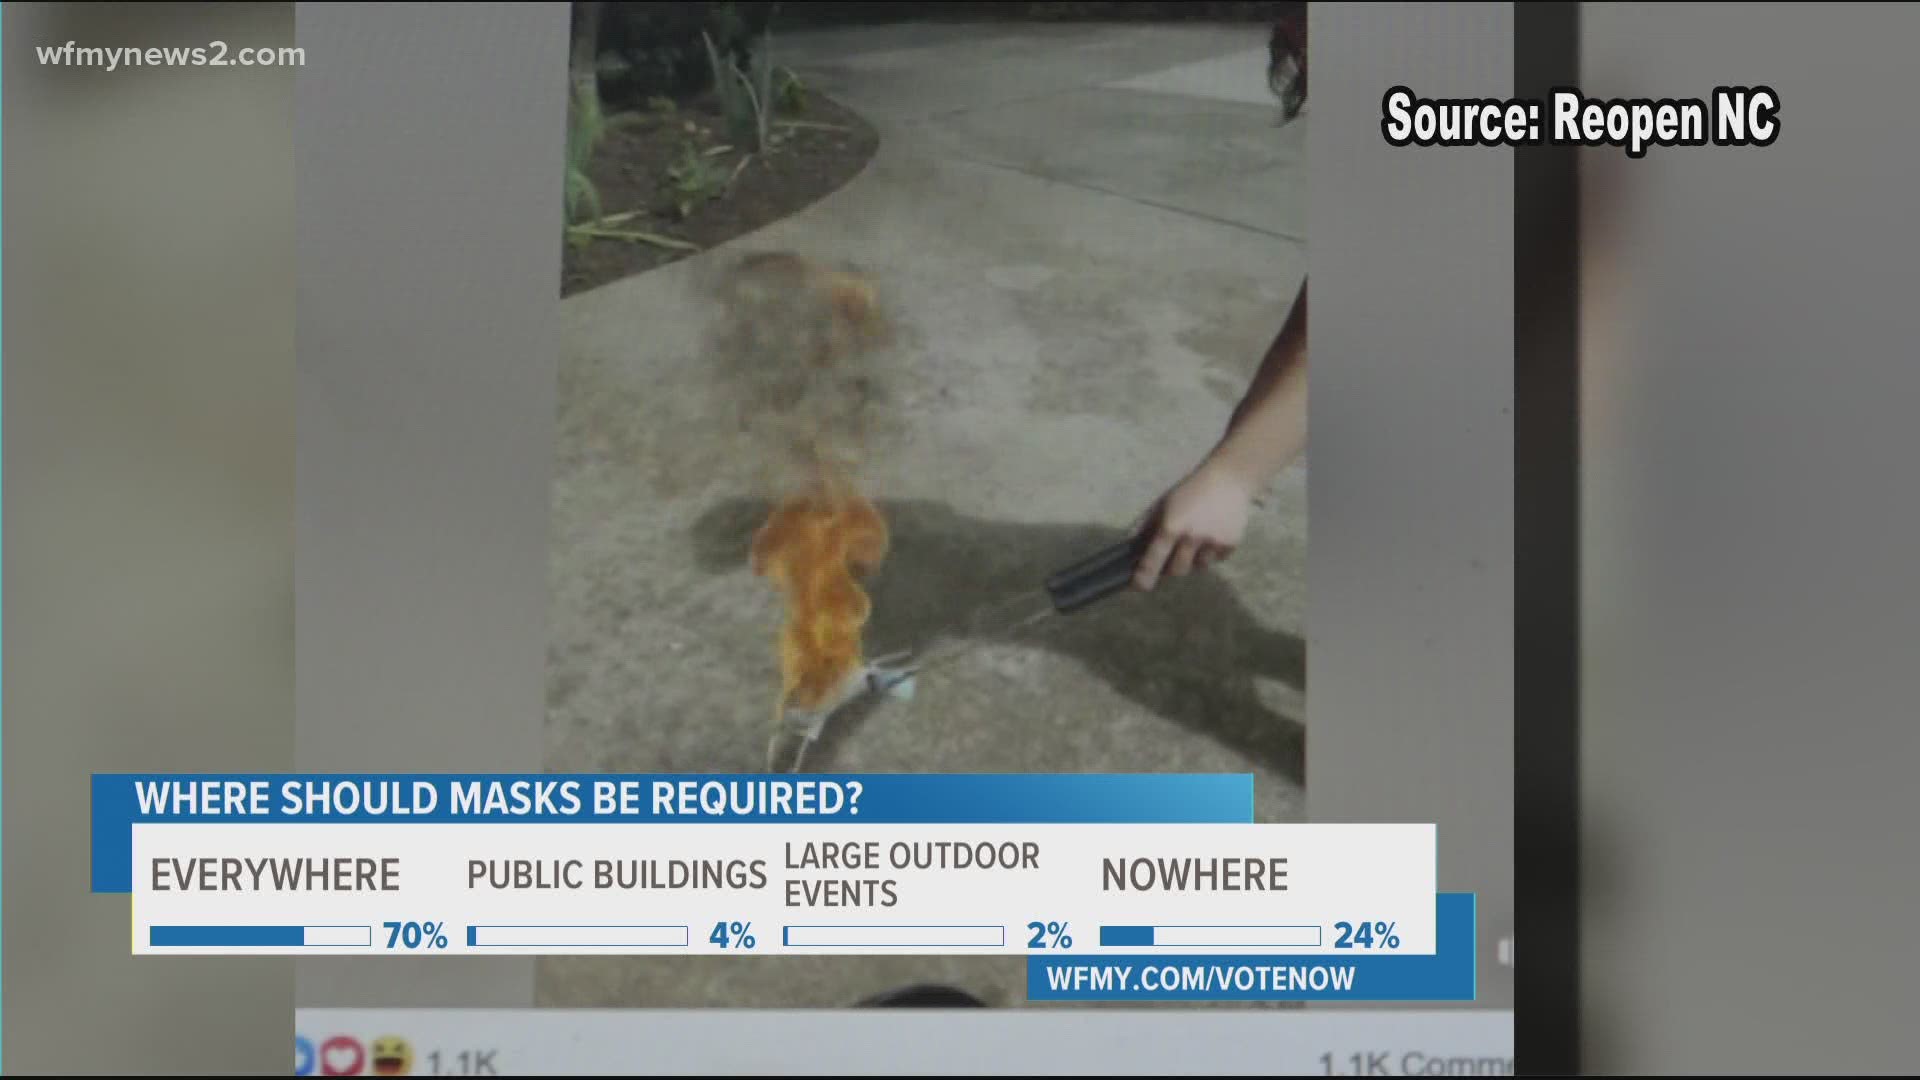 On Monday, Gov. Roy Cooper said he would consider making masks mandatory. Reopen NC burned masks in response.